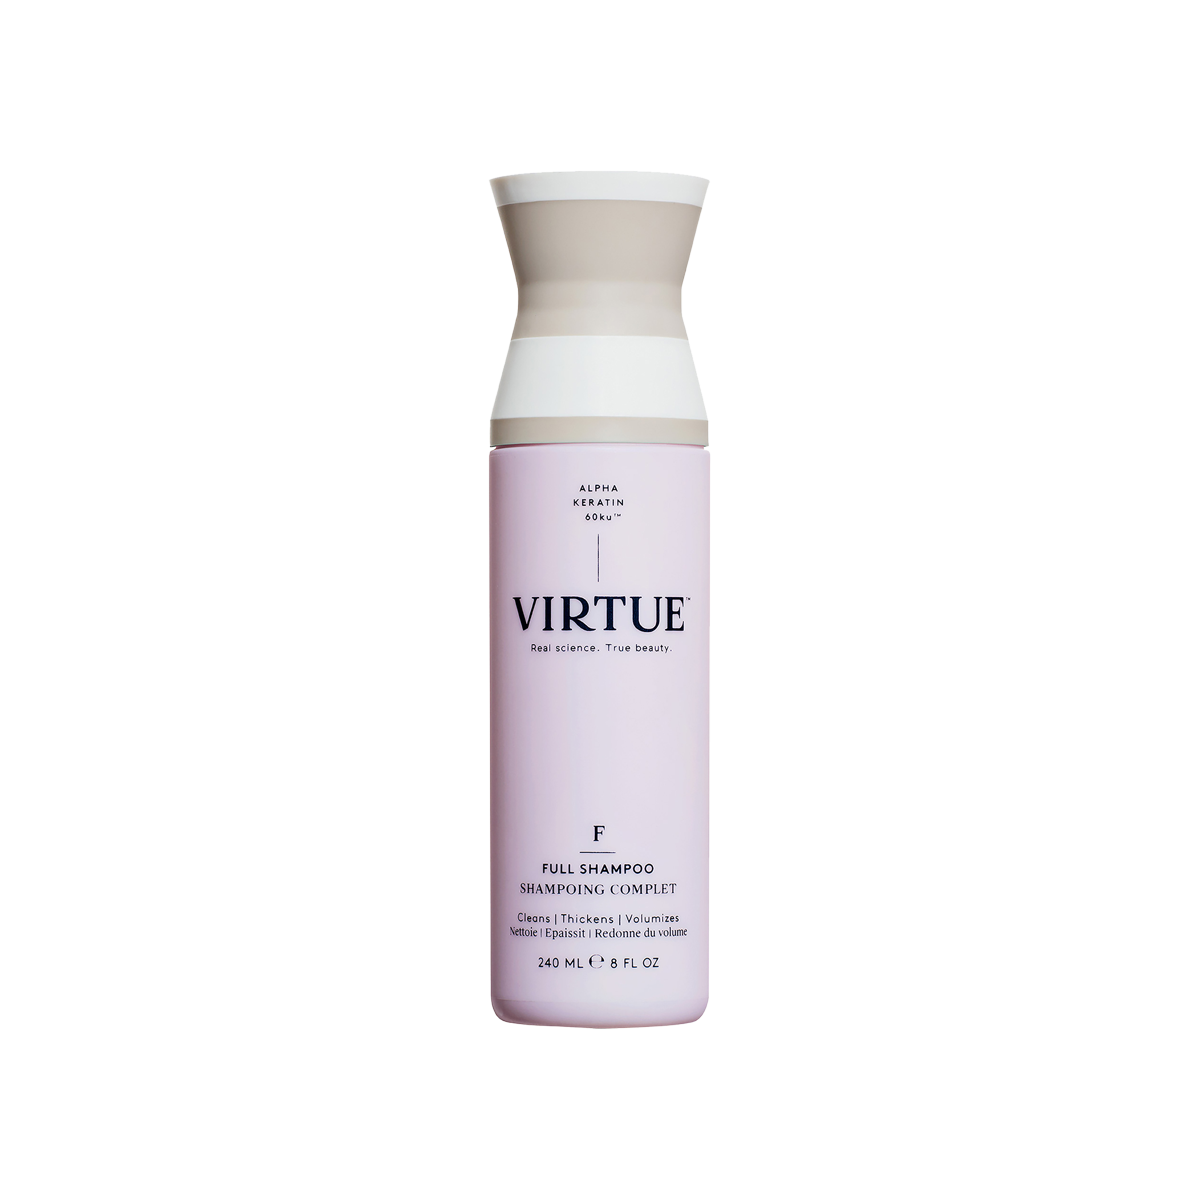 Virtue - Full Shampoo